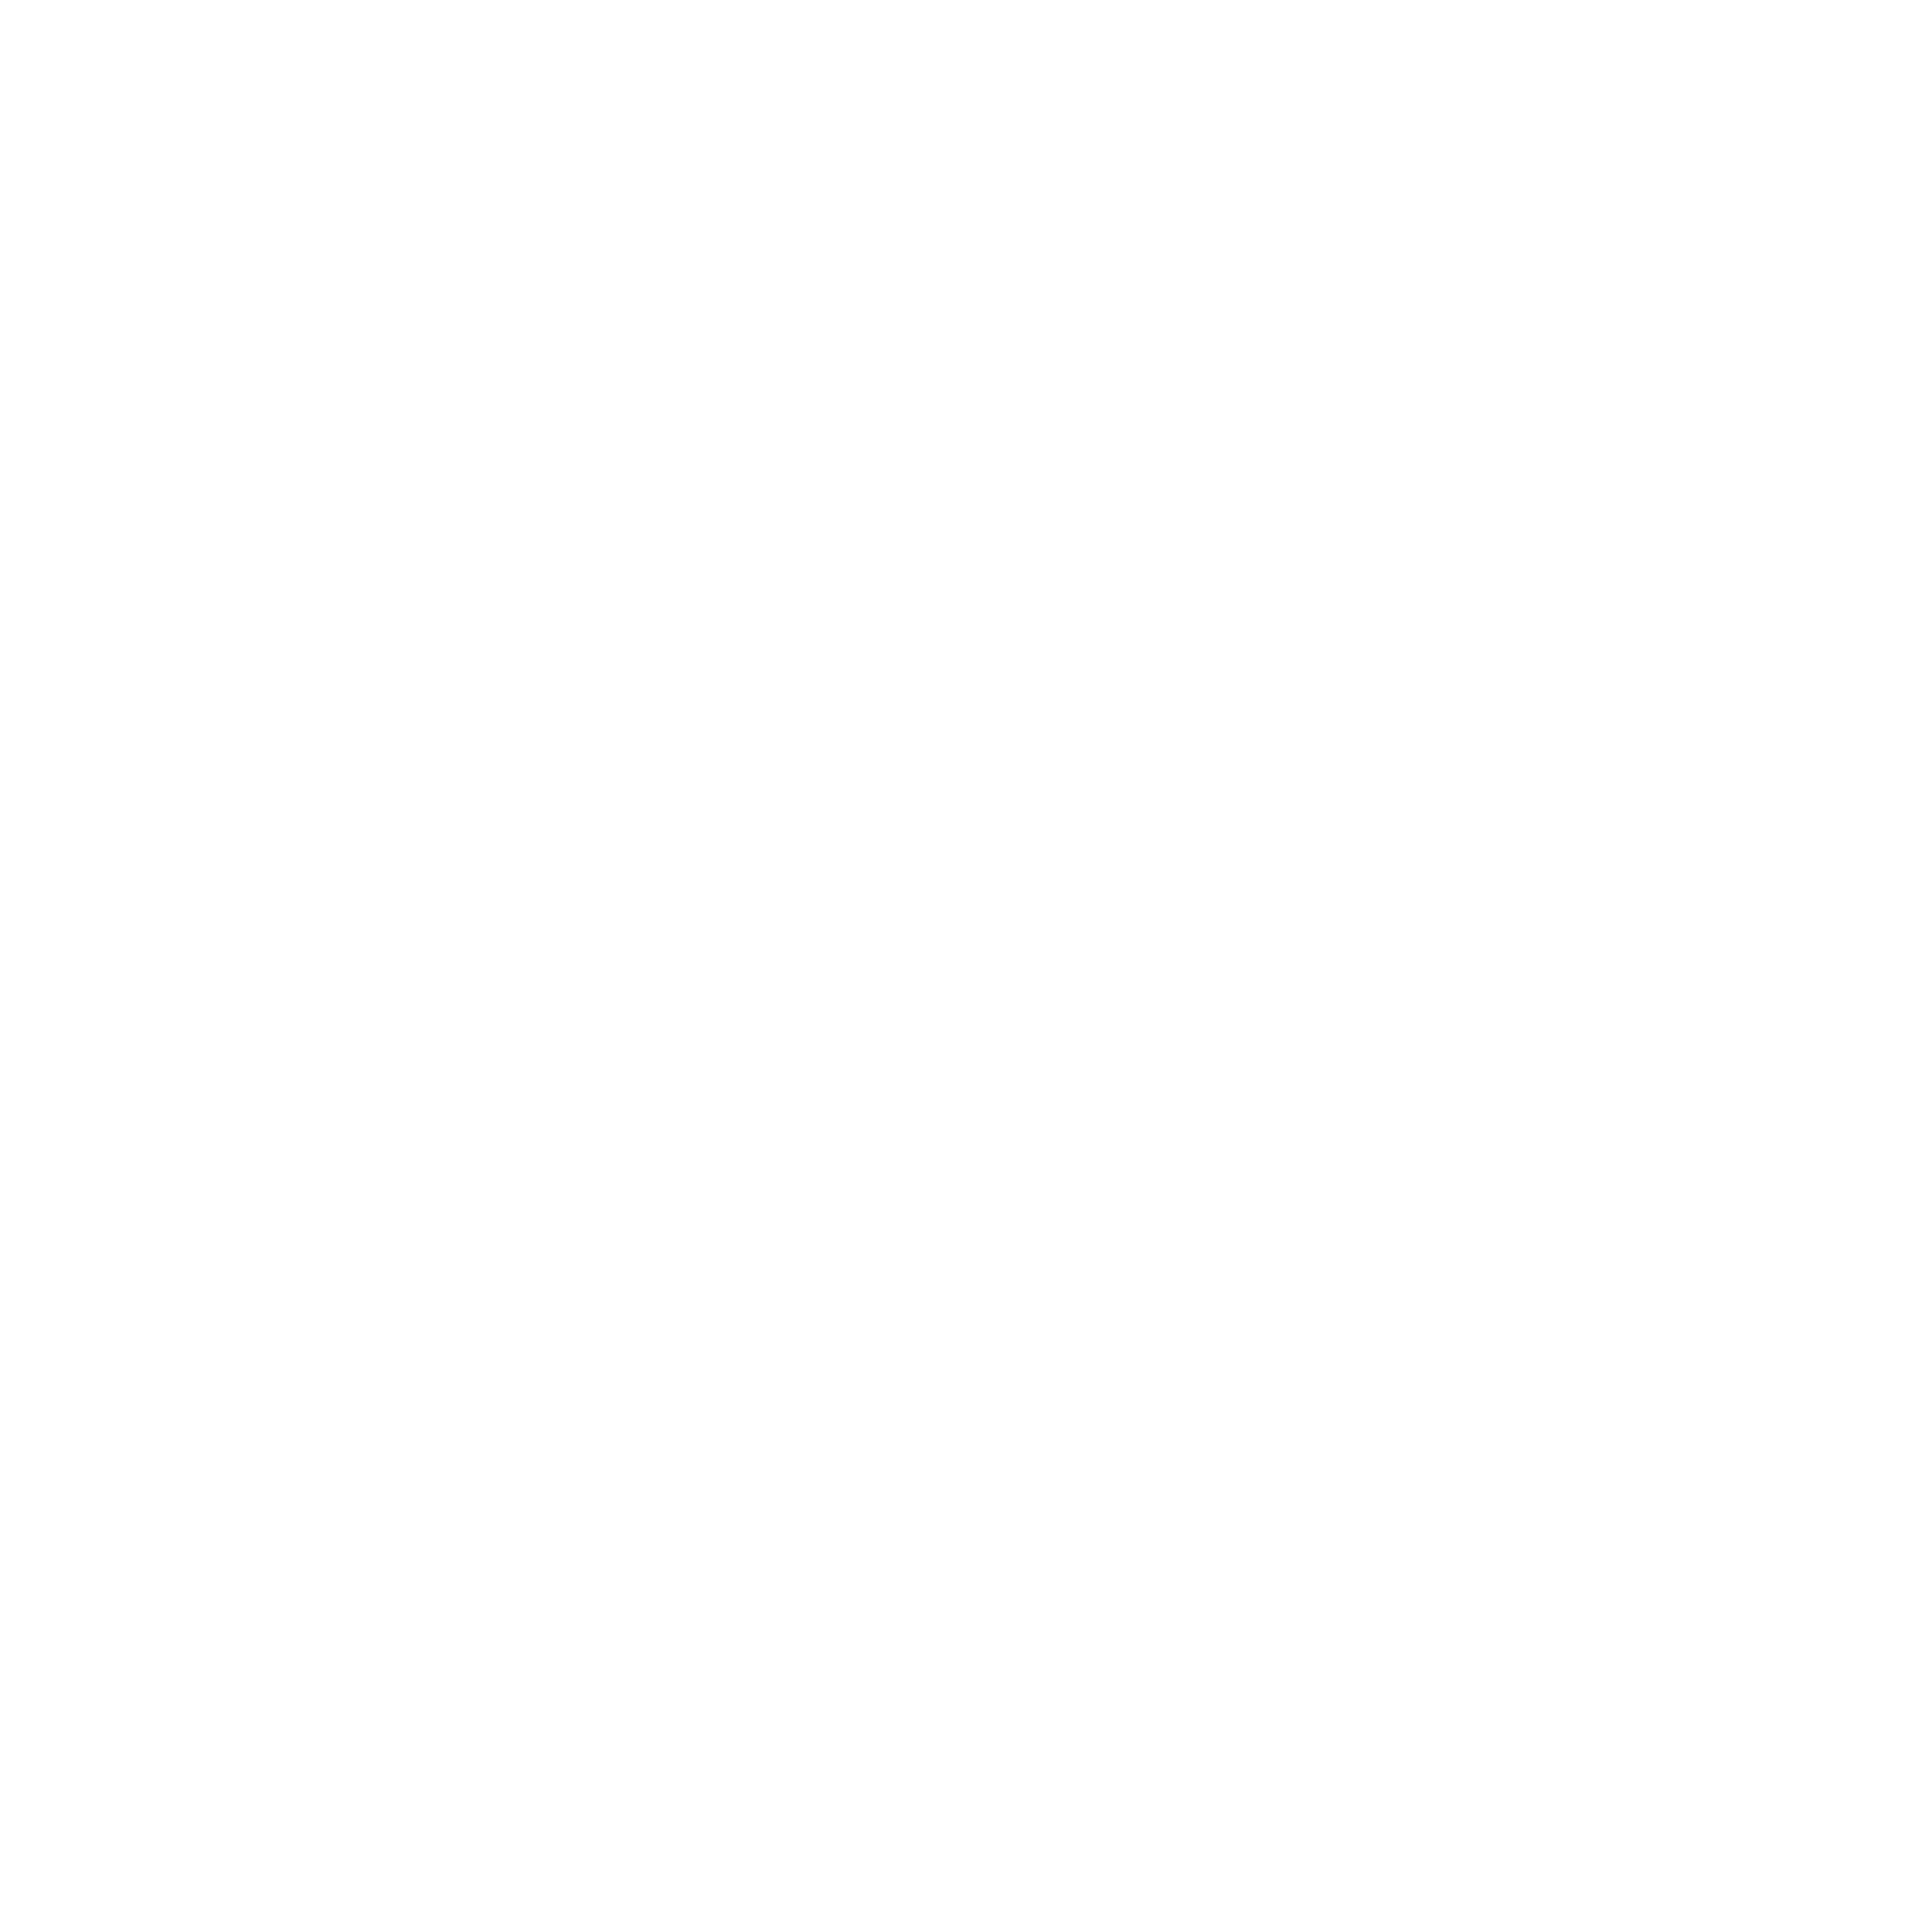 Neutrogena Logo - Neutrogena Logo PNG Transparent & SVG Vector